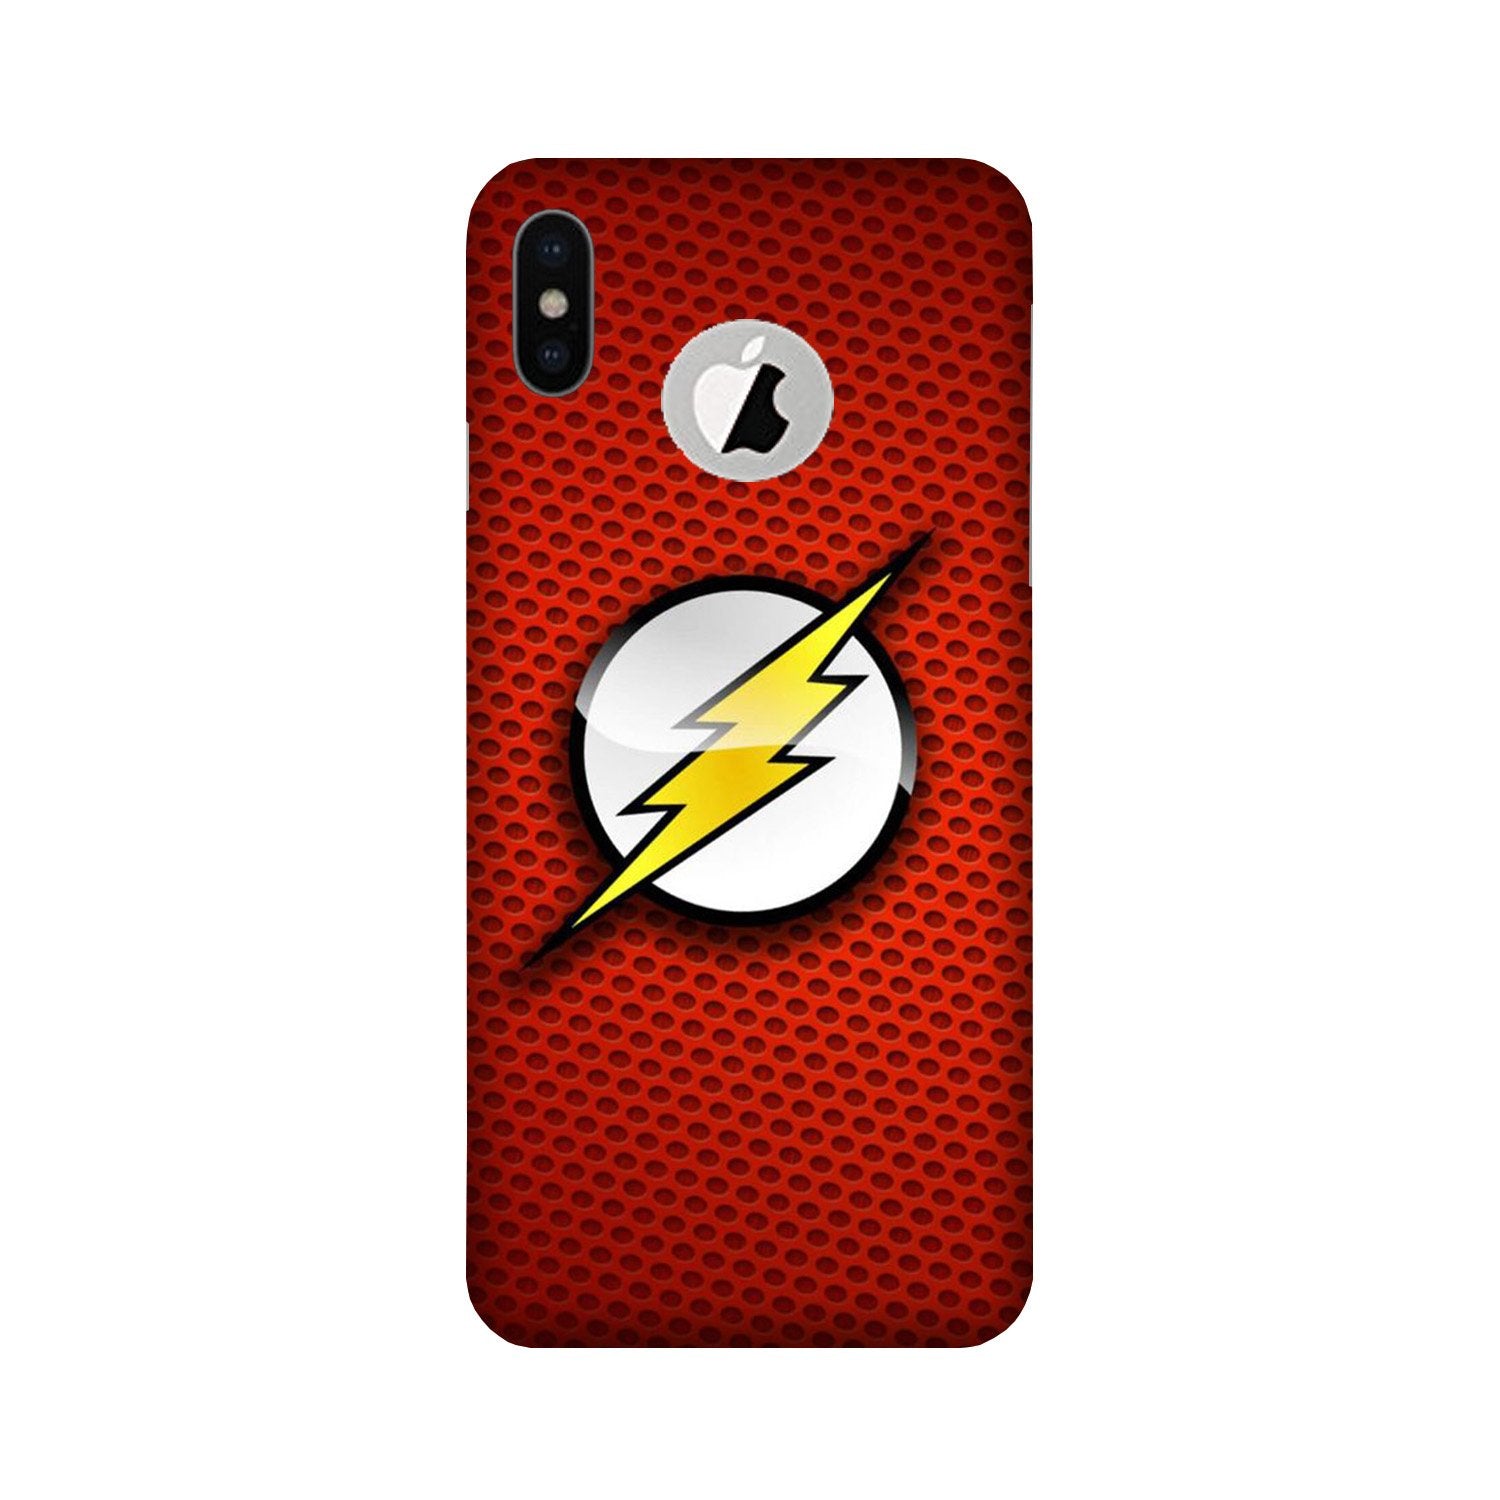 Flash Case for iPhone X logo cut (Design No. 252)